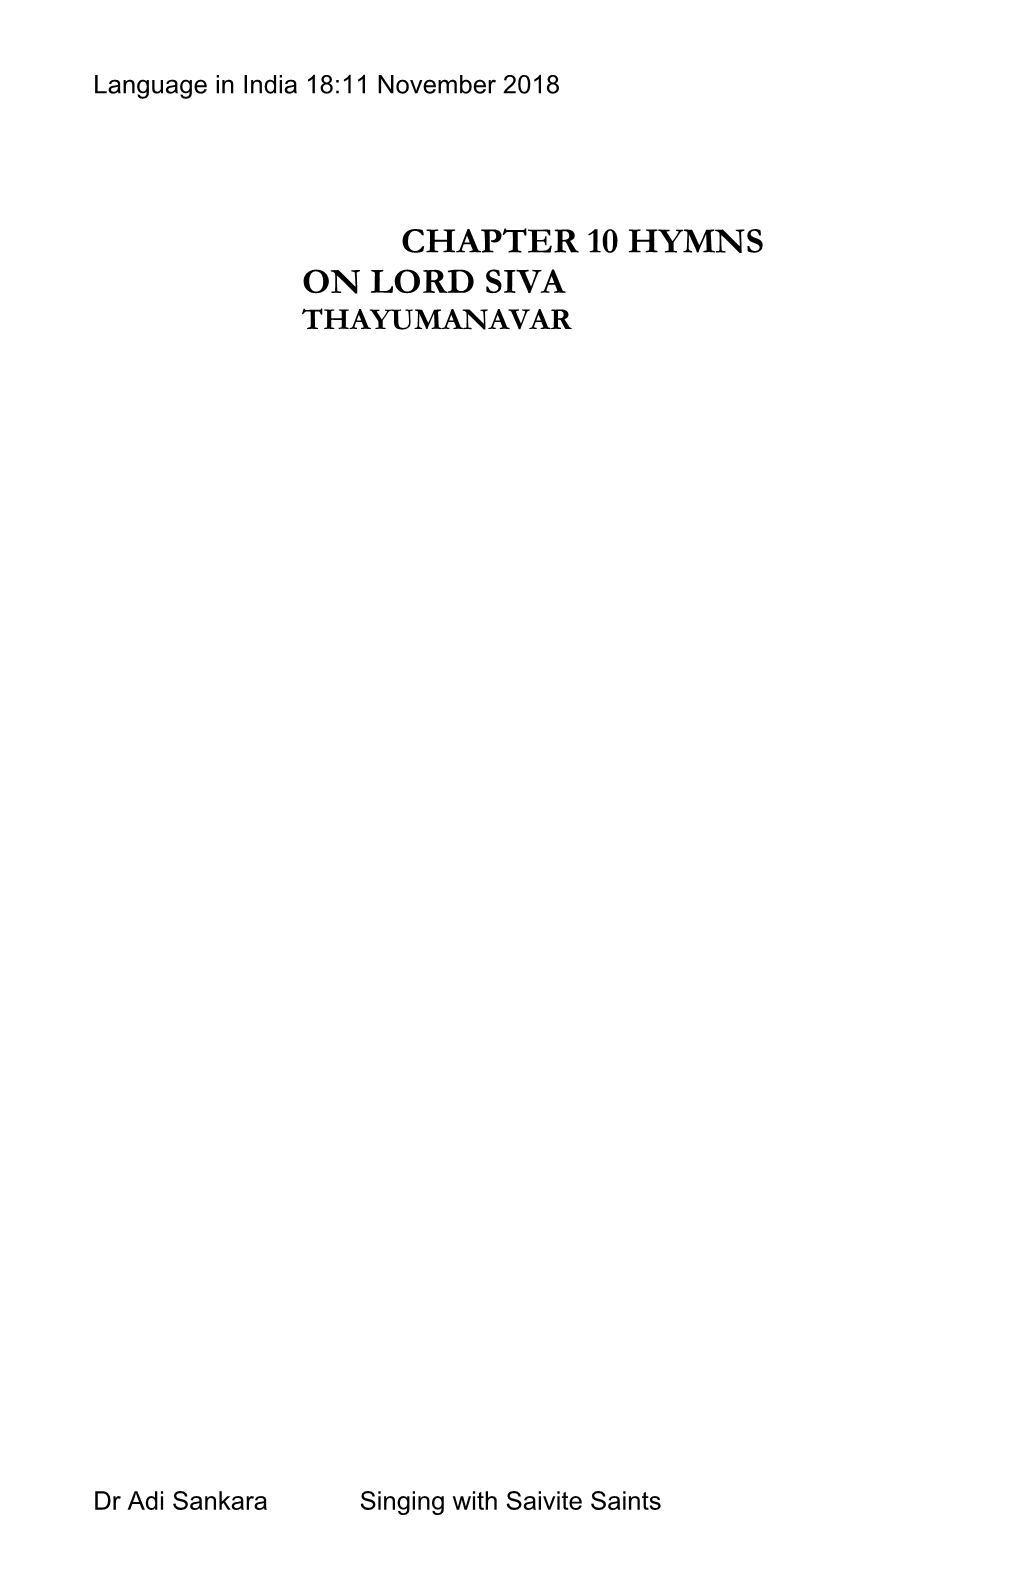 Chapter 10 Hymns on Lord Siva Thayumanavar